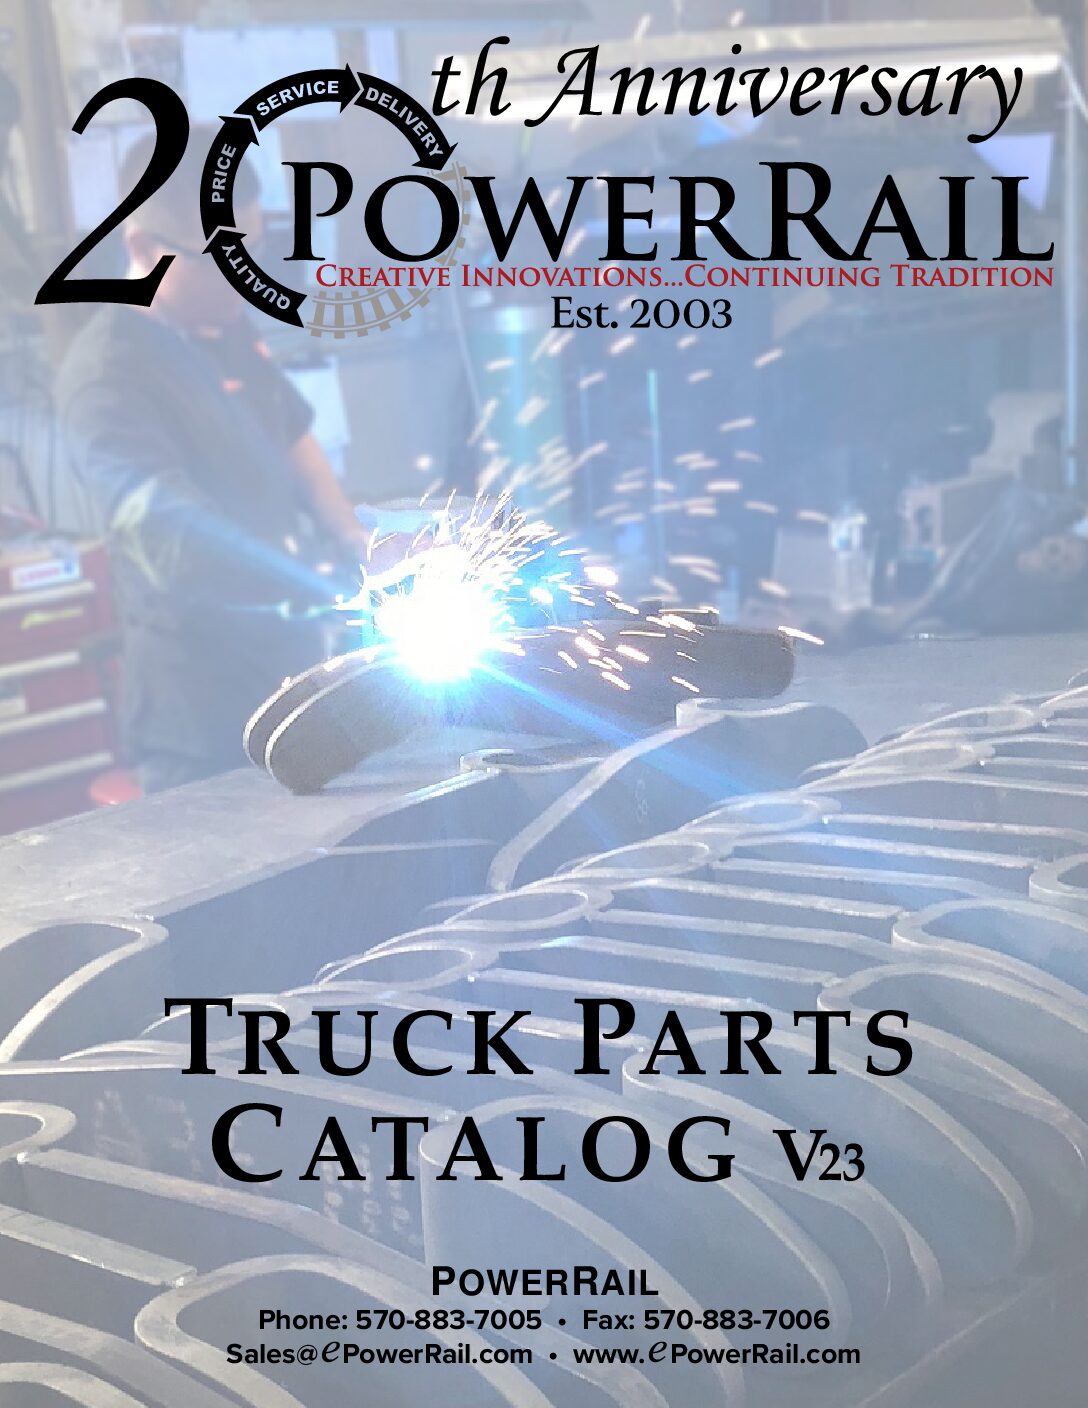 PowerRail Truck Parts Catalog V23